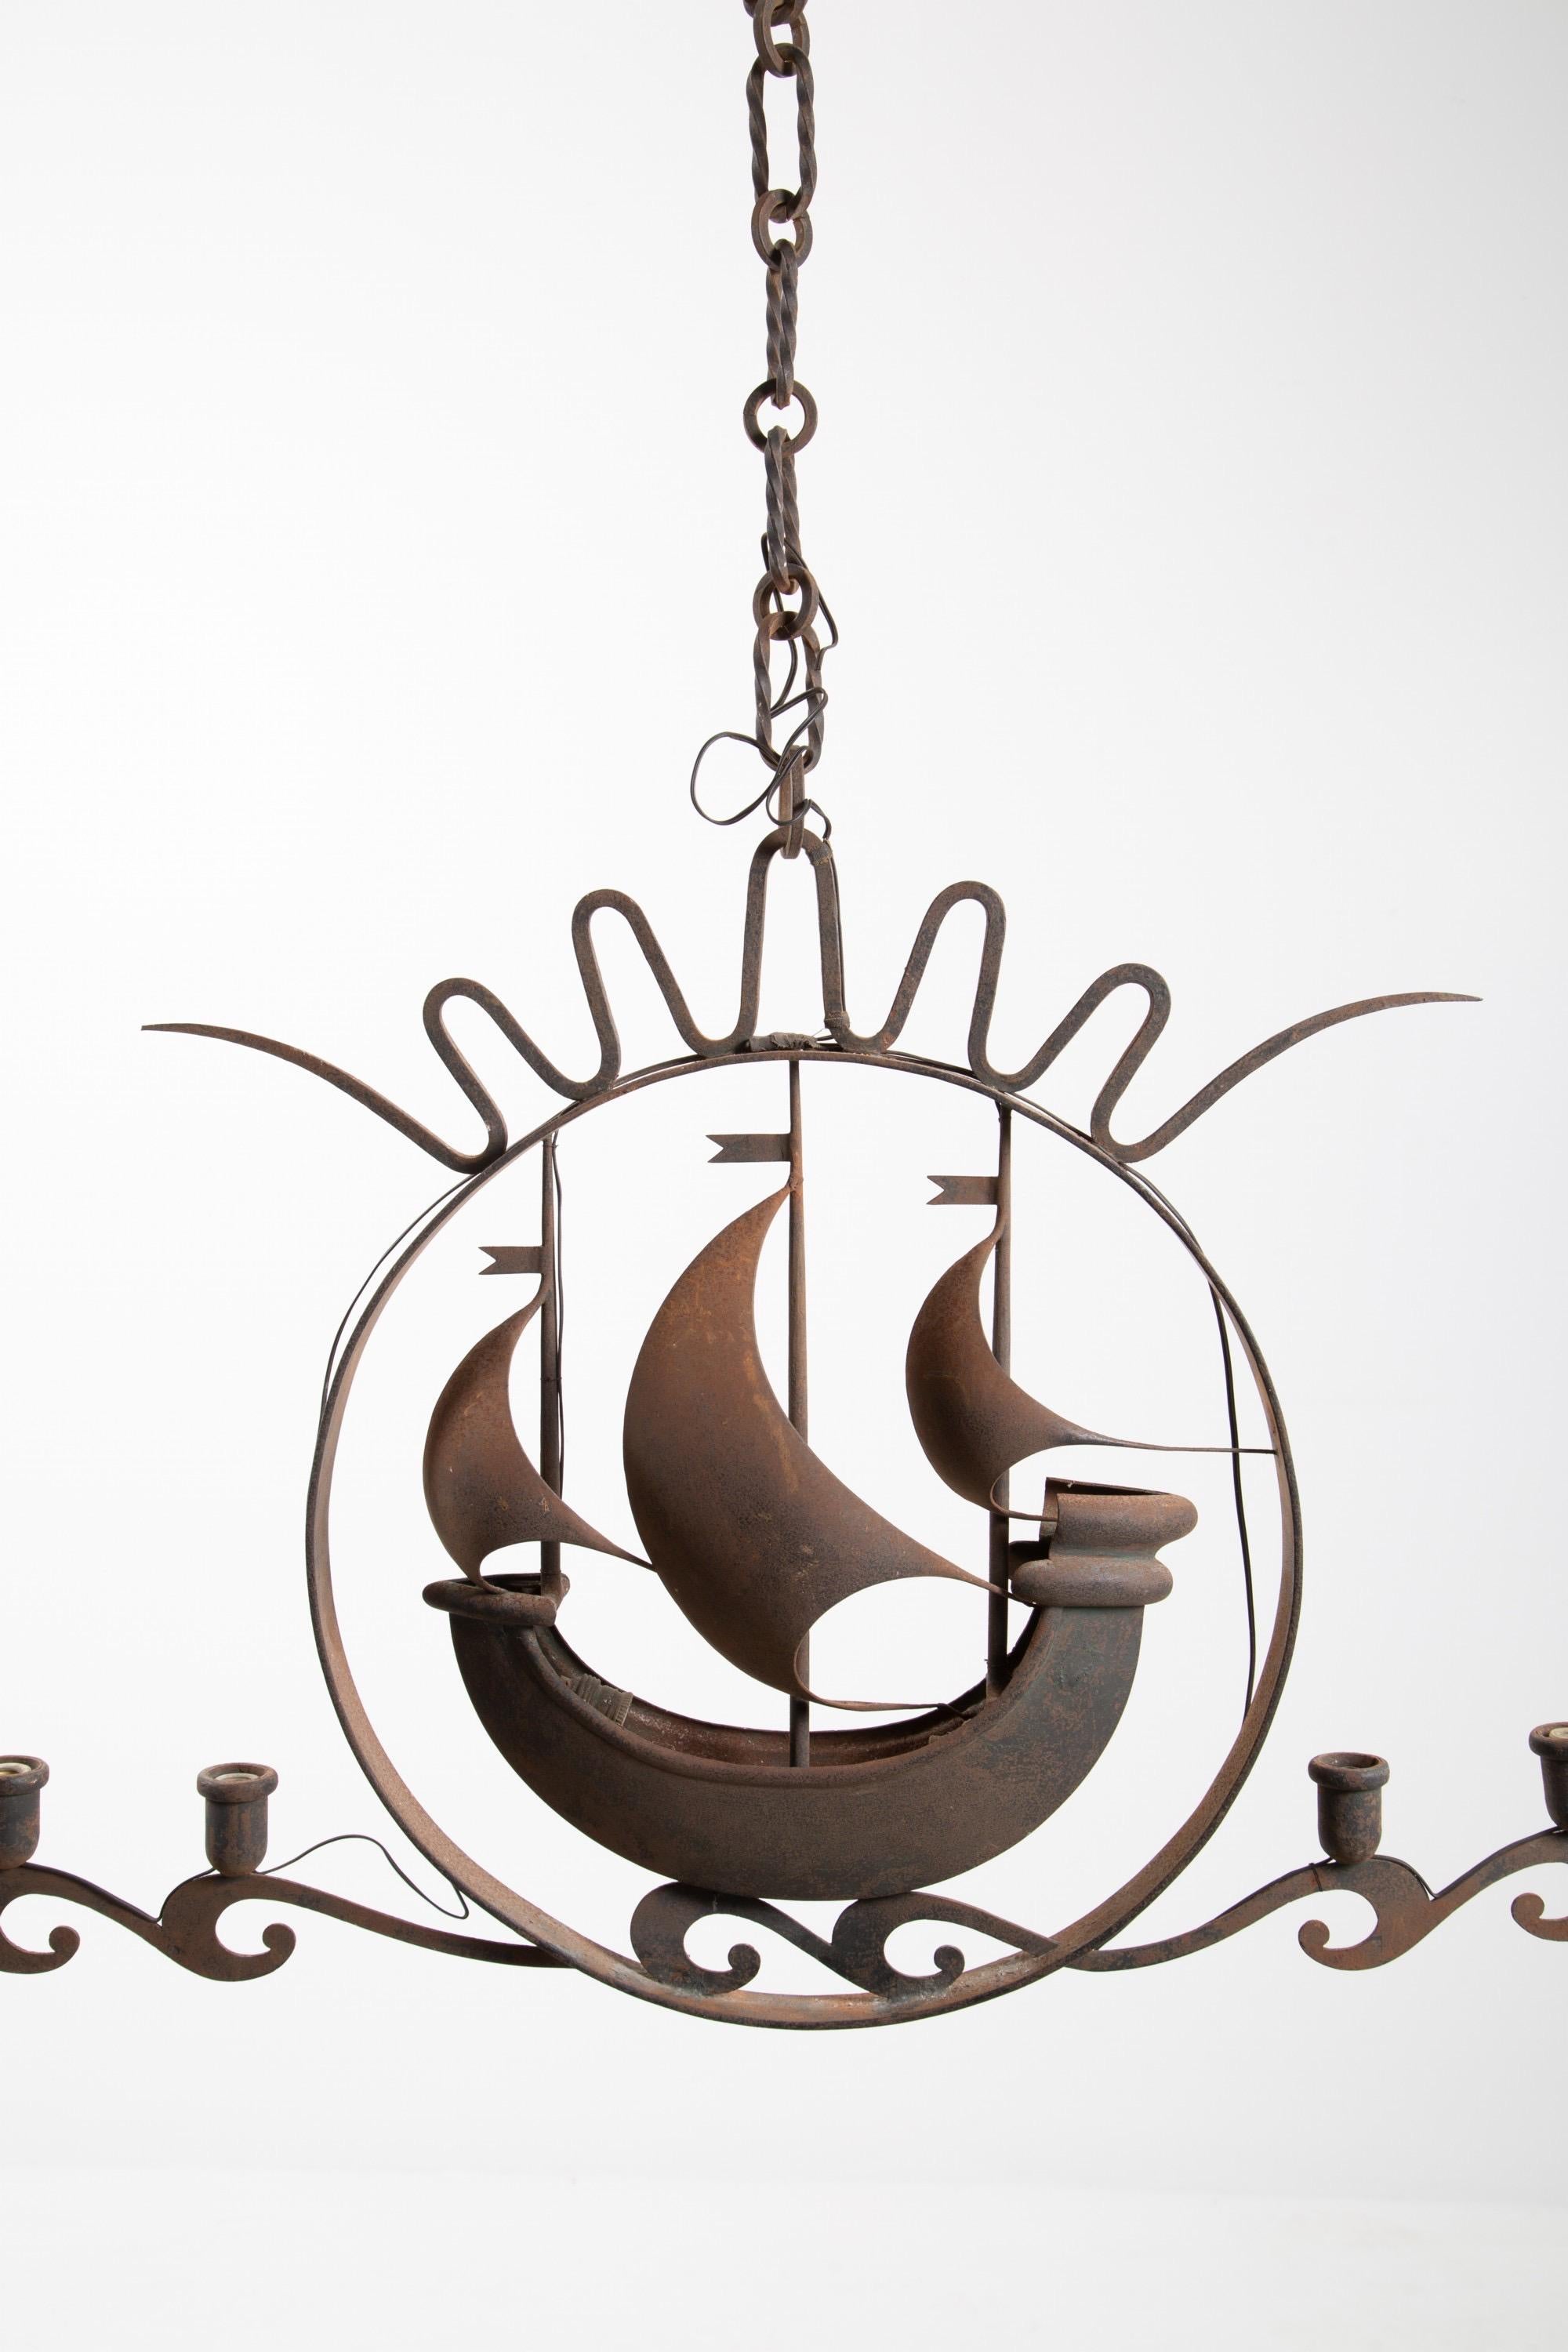 Mid-20th Century Italian Art Deco Iron Nautical Chandelier Attributed to Gio Ponti